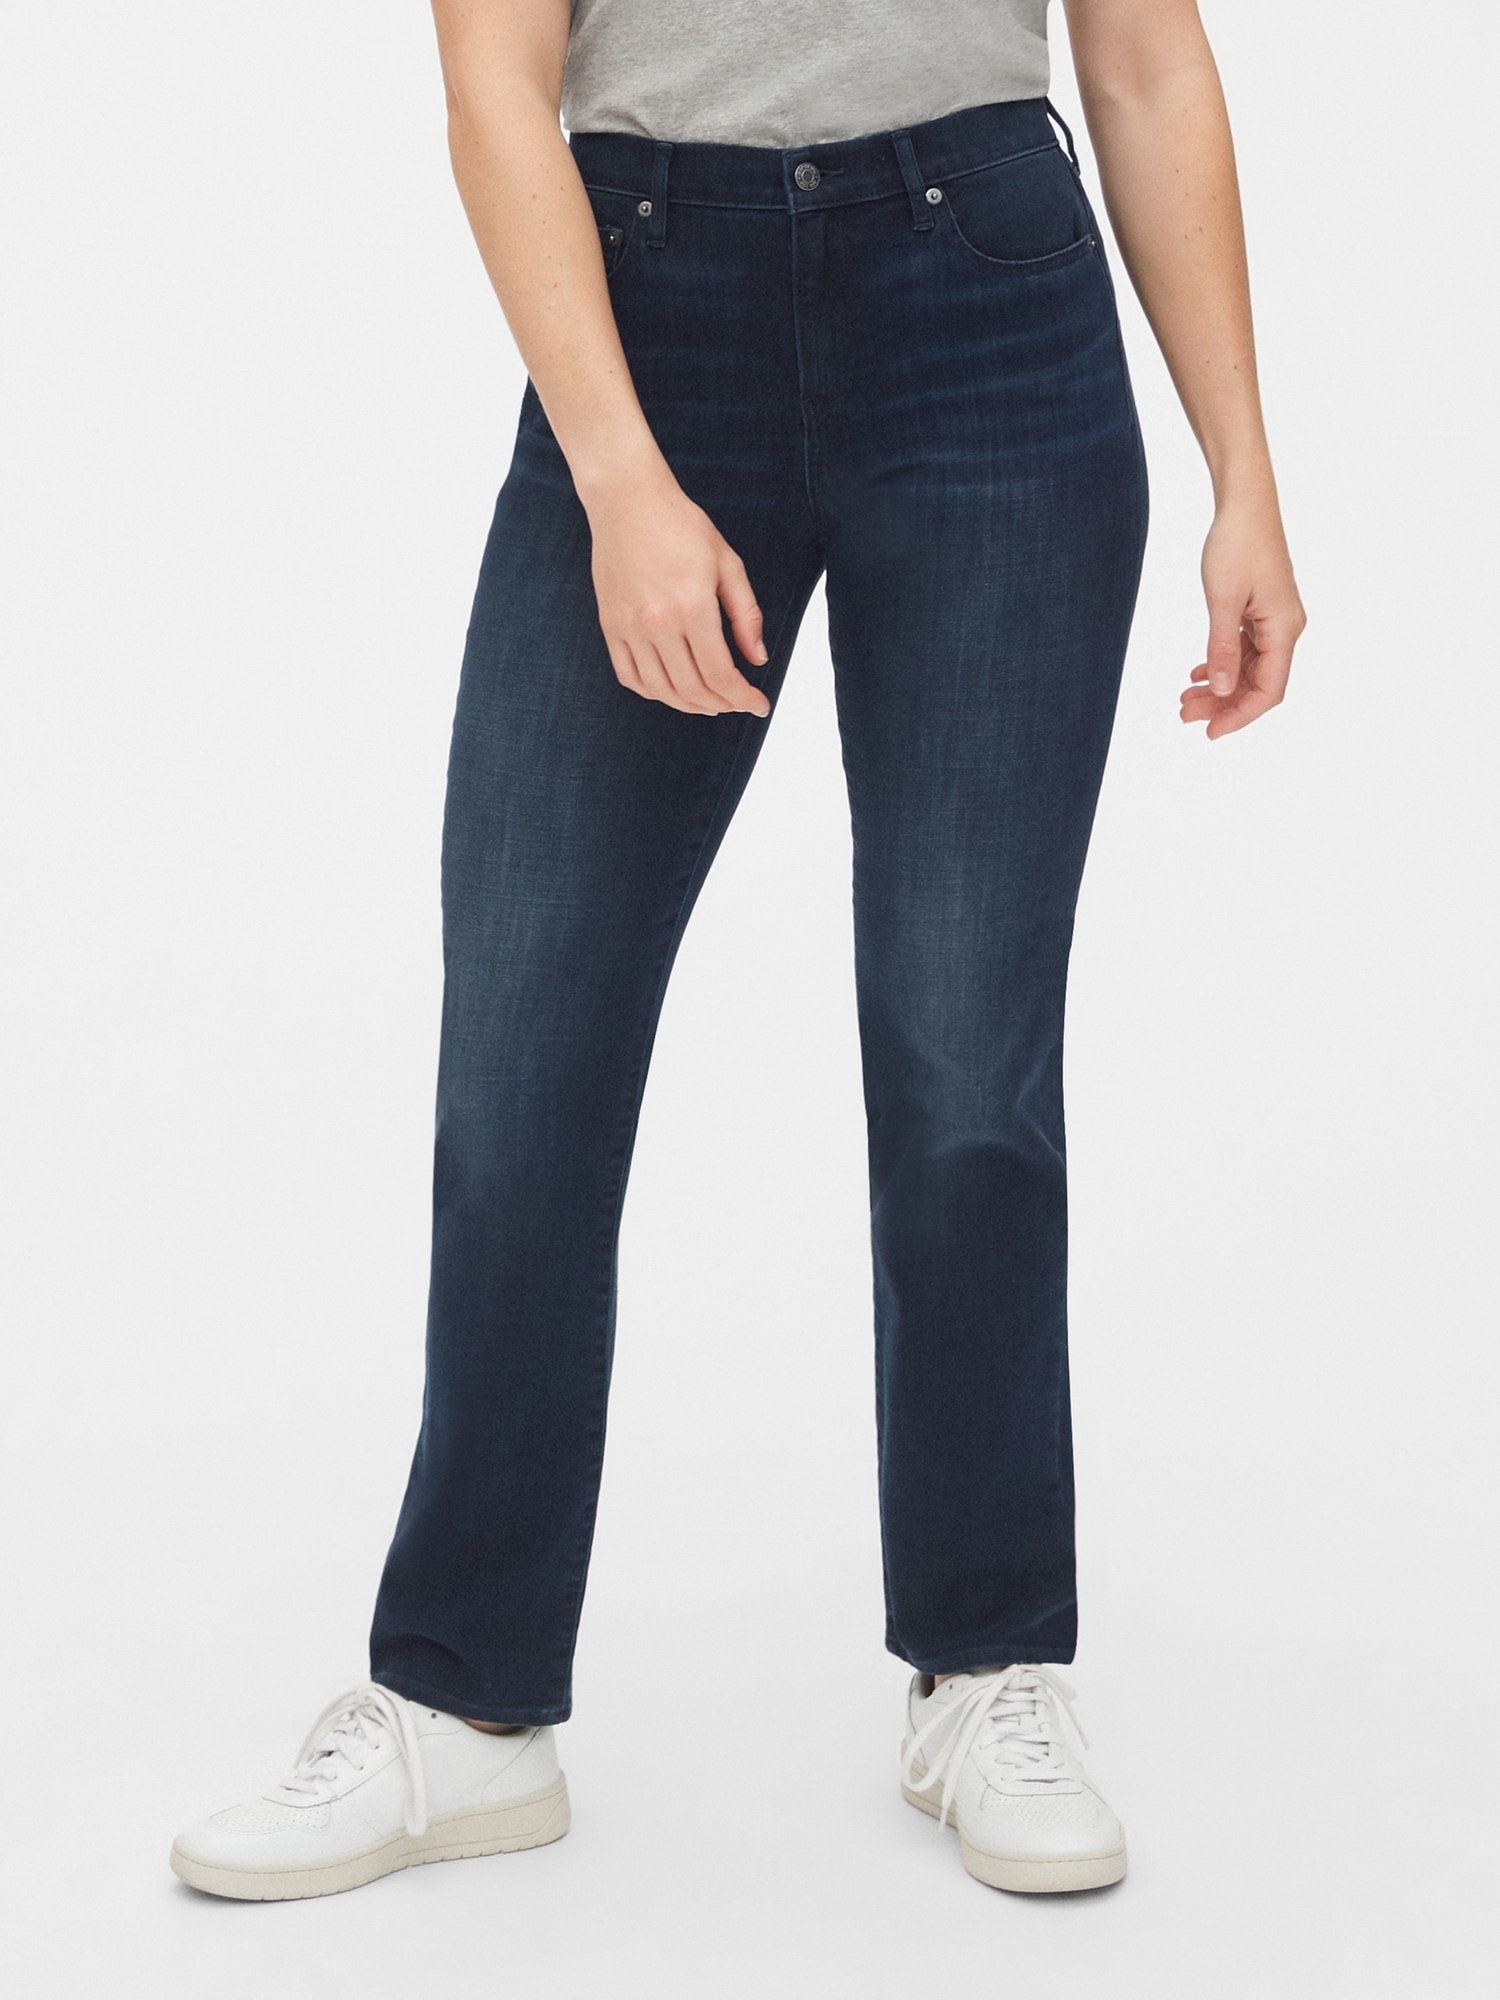 gap classic jeans